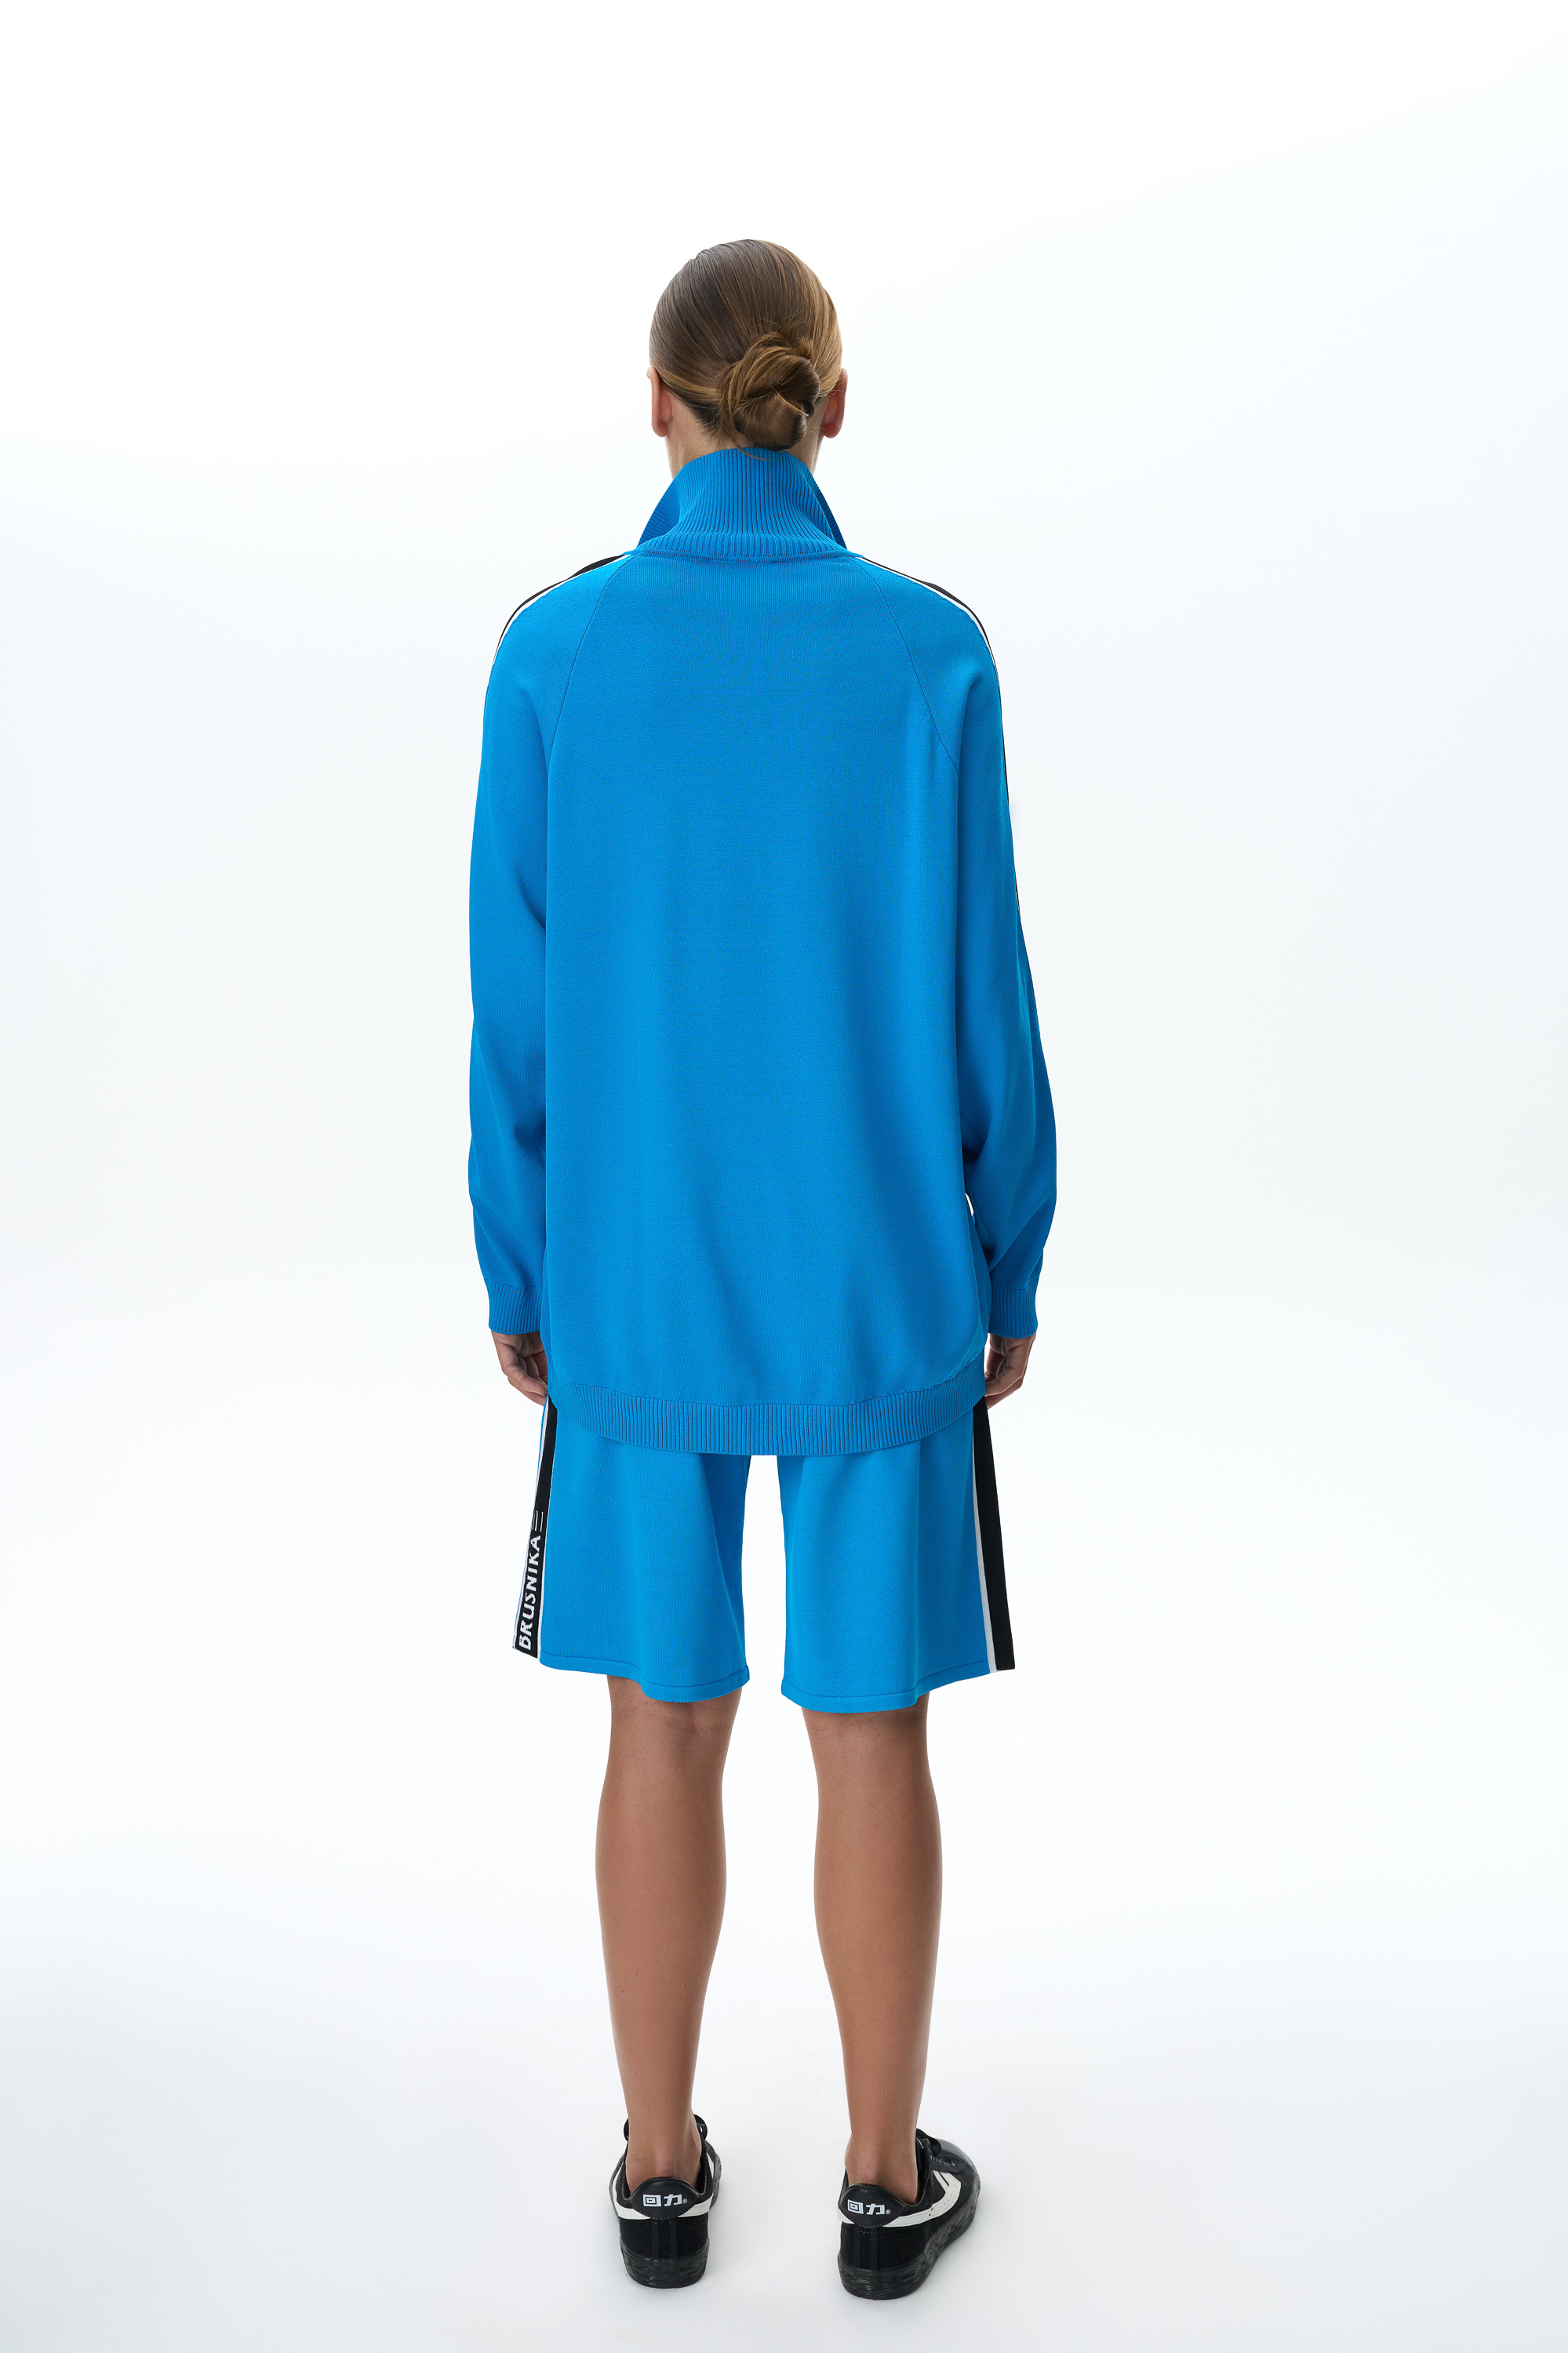 shorts 4523-25 Dark blue from BRUSNiKA